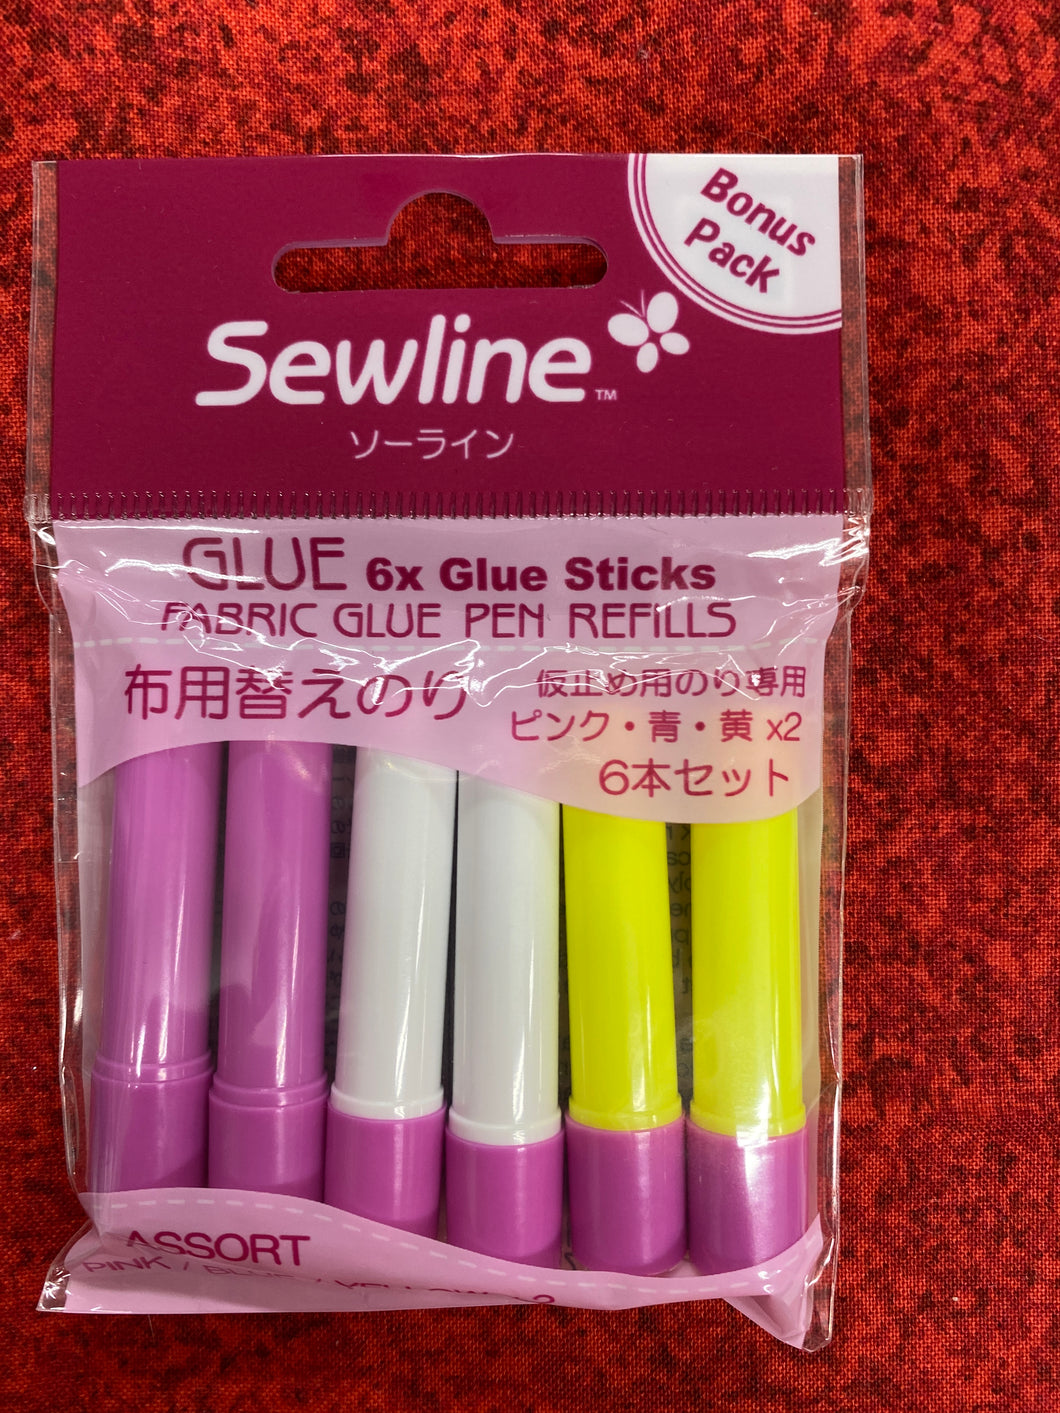 Sewline Glue sticks